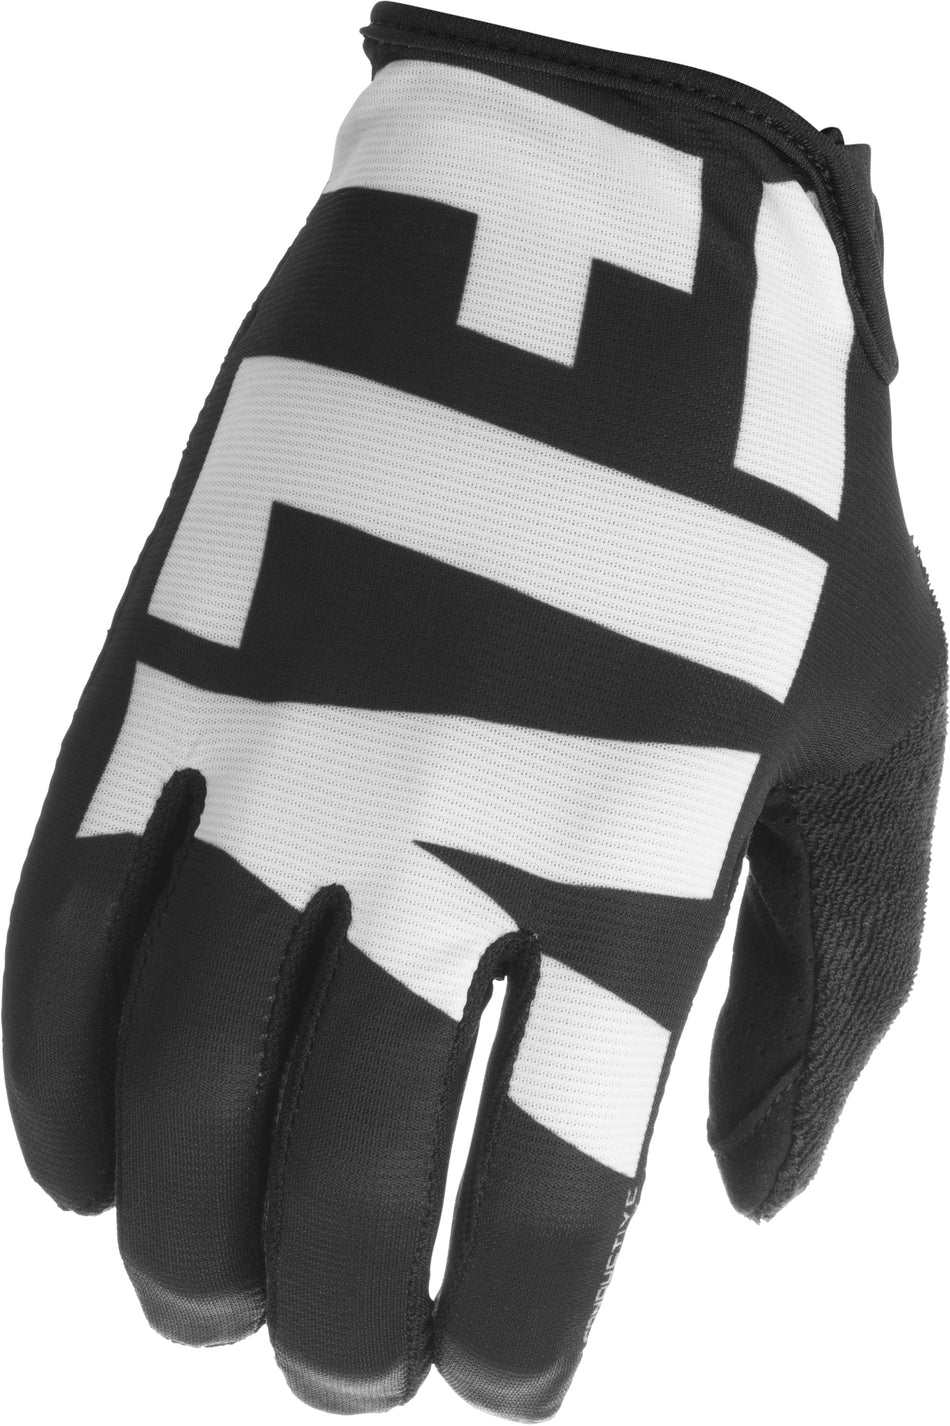 FLY RACING Media Gloves Black/White Sz 10 350-10410